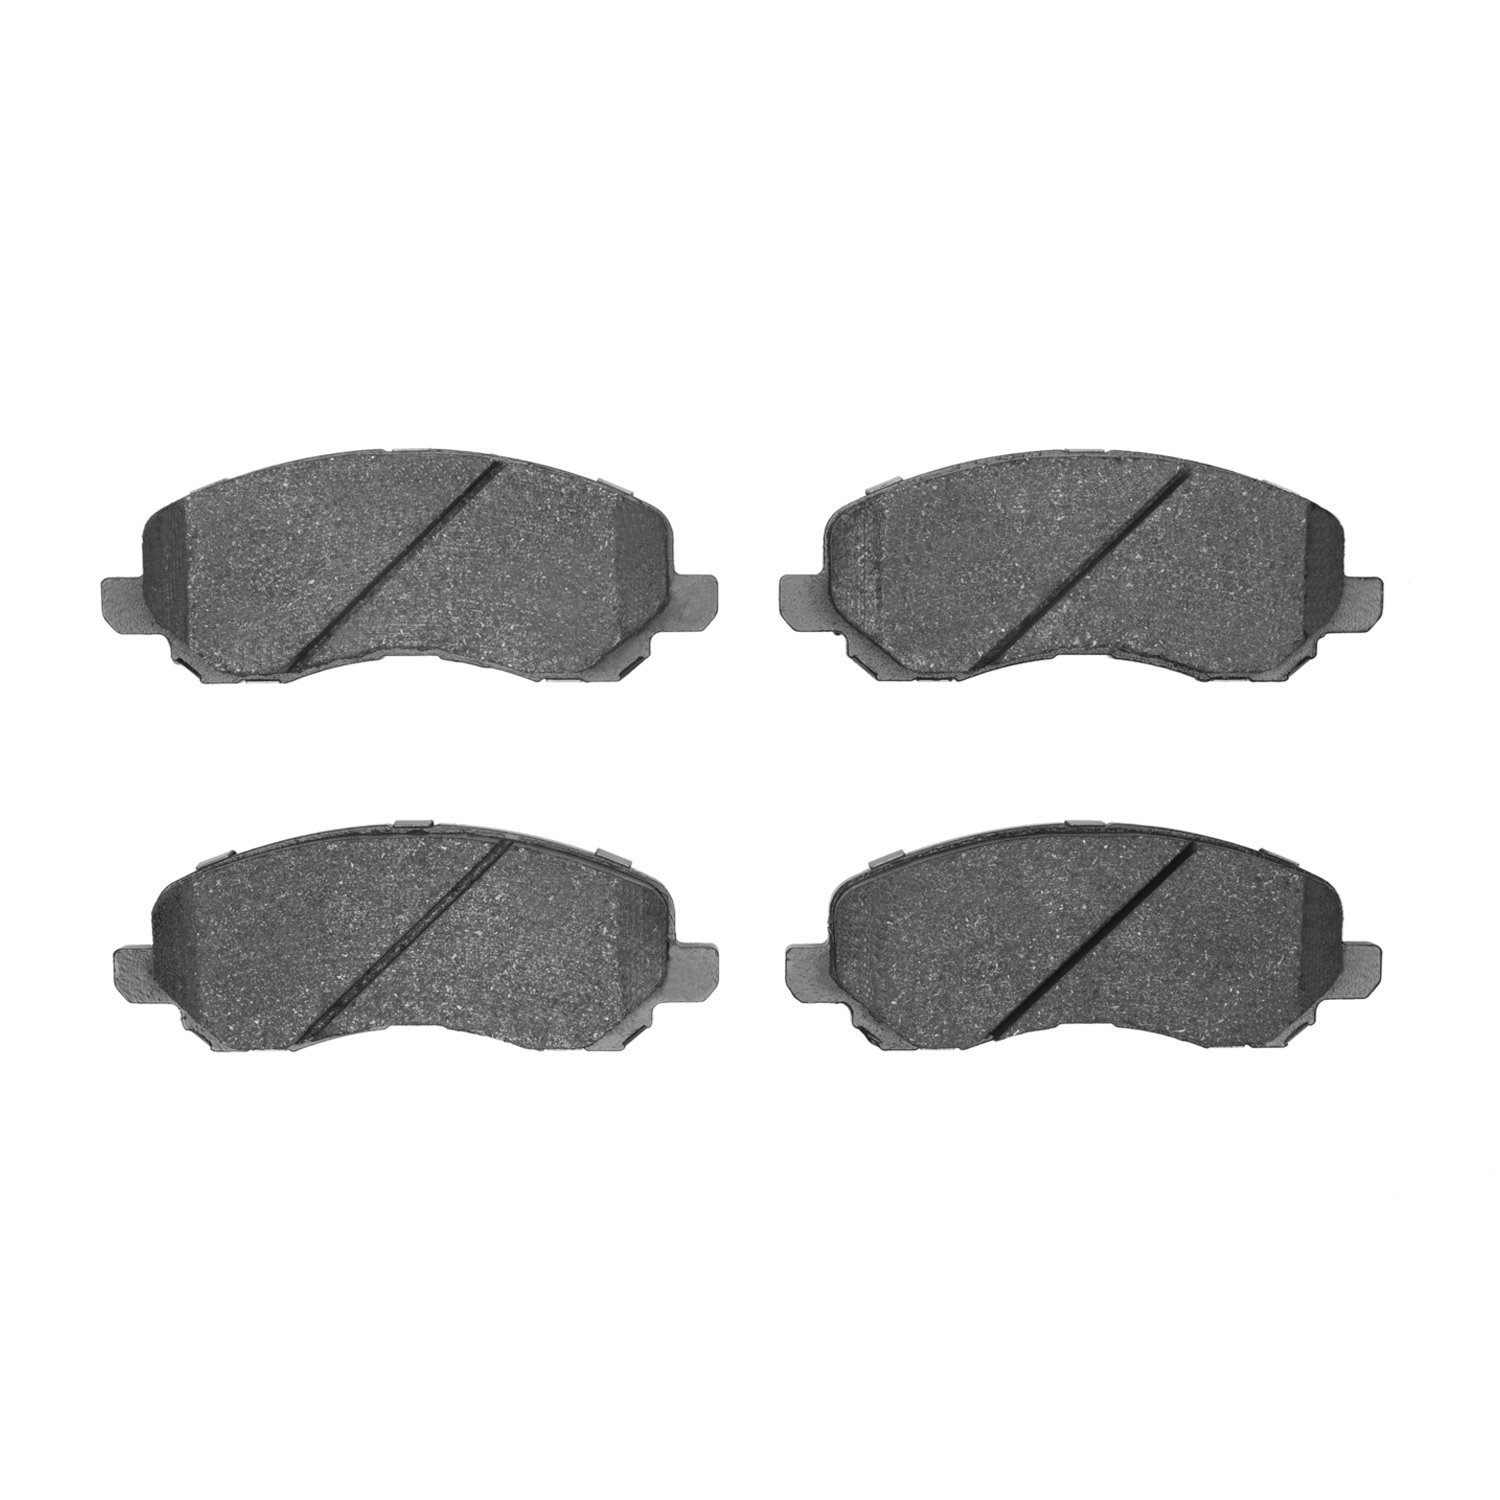 1551-0866-00 5000 Advanced Ceramic Brake Pads, Fits Select Multiple Makes/Models, Position: Front